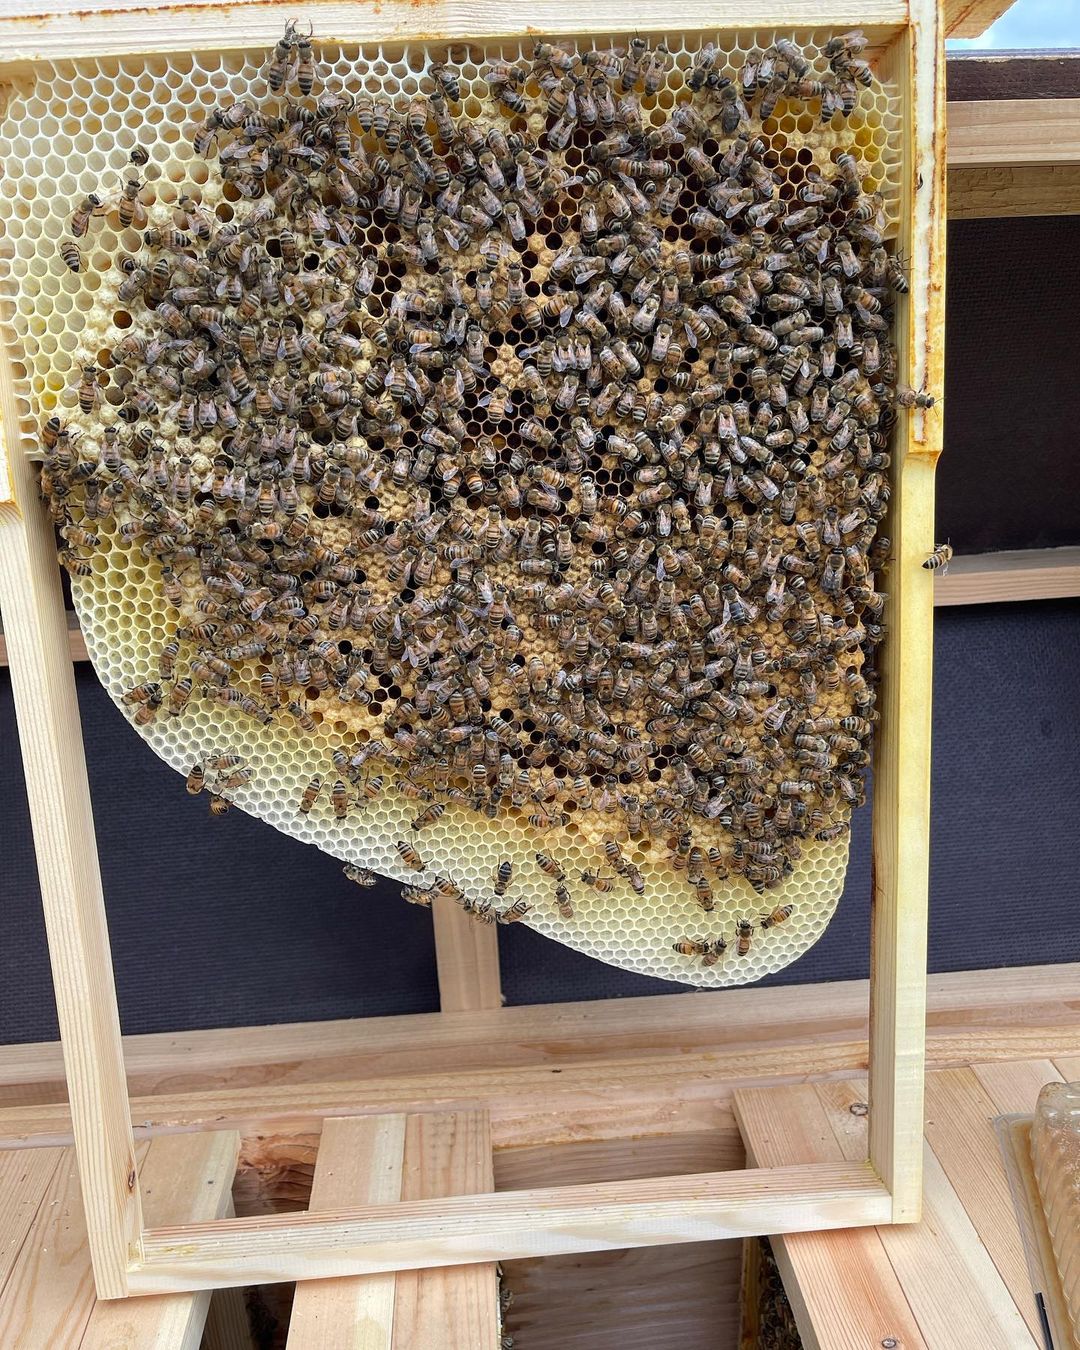 Layens Hive